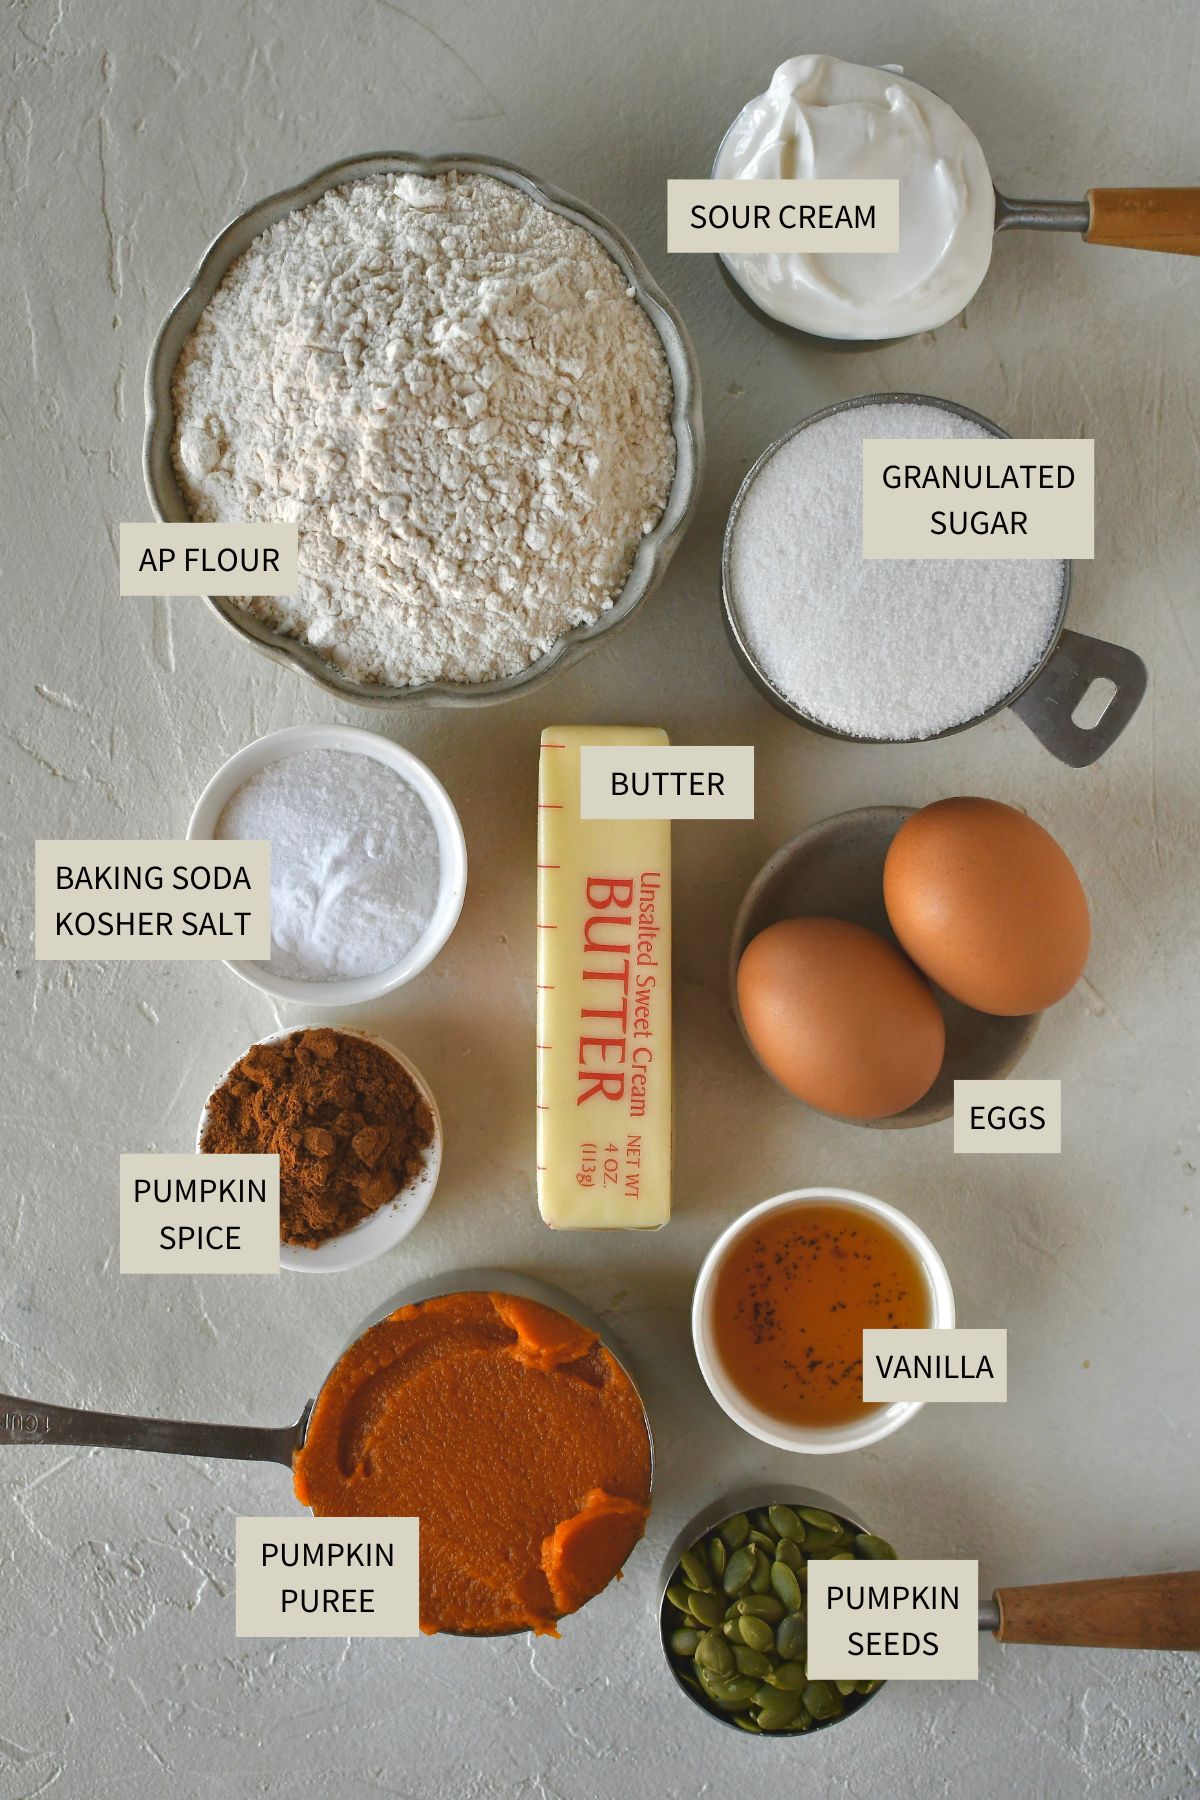 Ingredients needed to make Pumpkin Spice Bread.